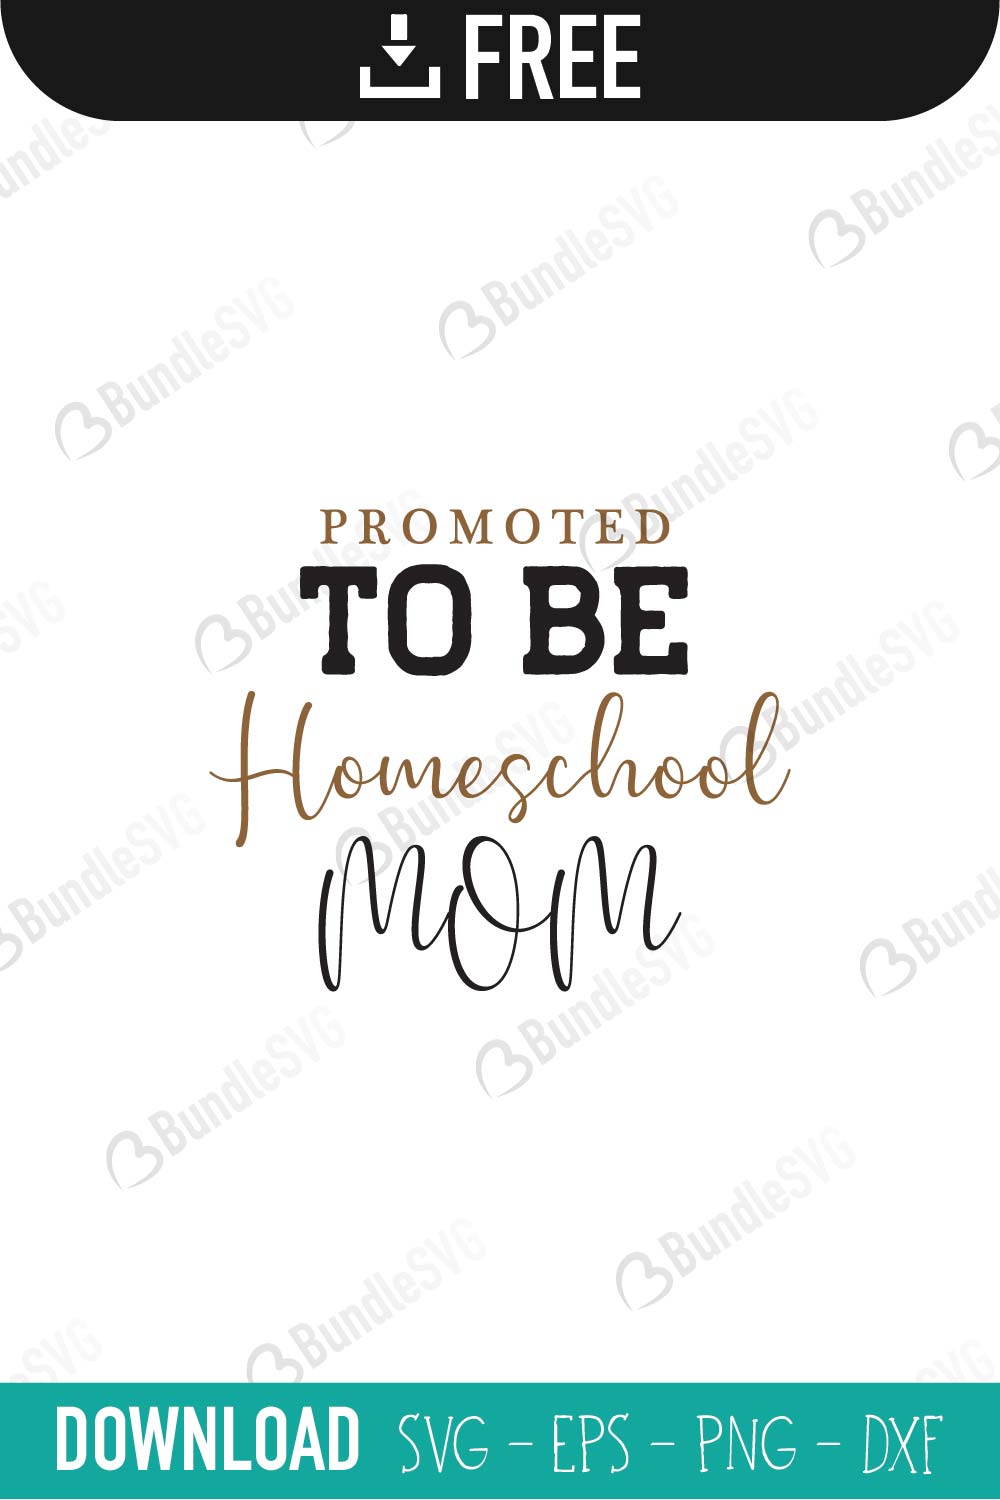 Download Homeschool Mom SVG Cut Files Free Download | BundleSVG